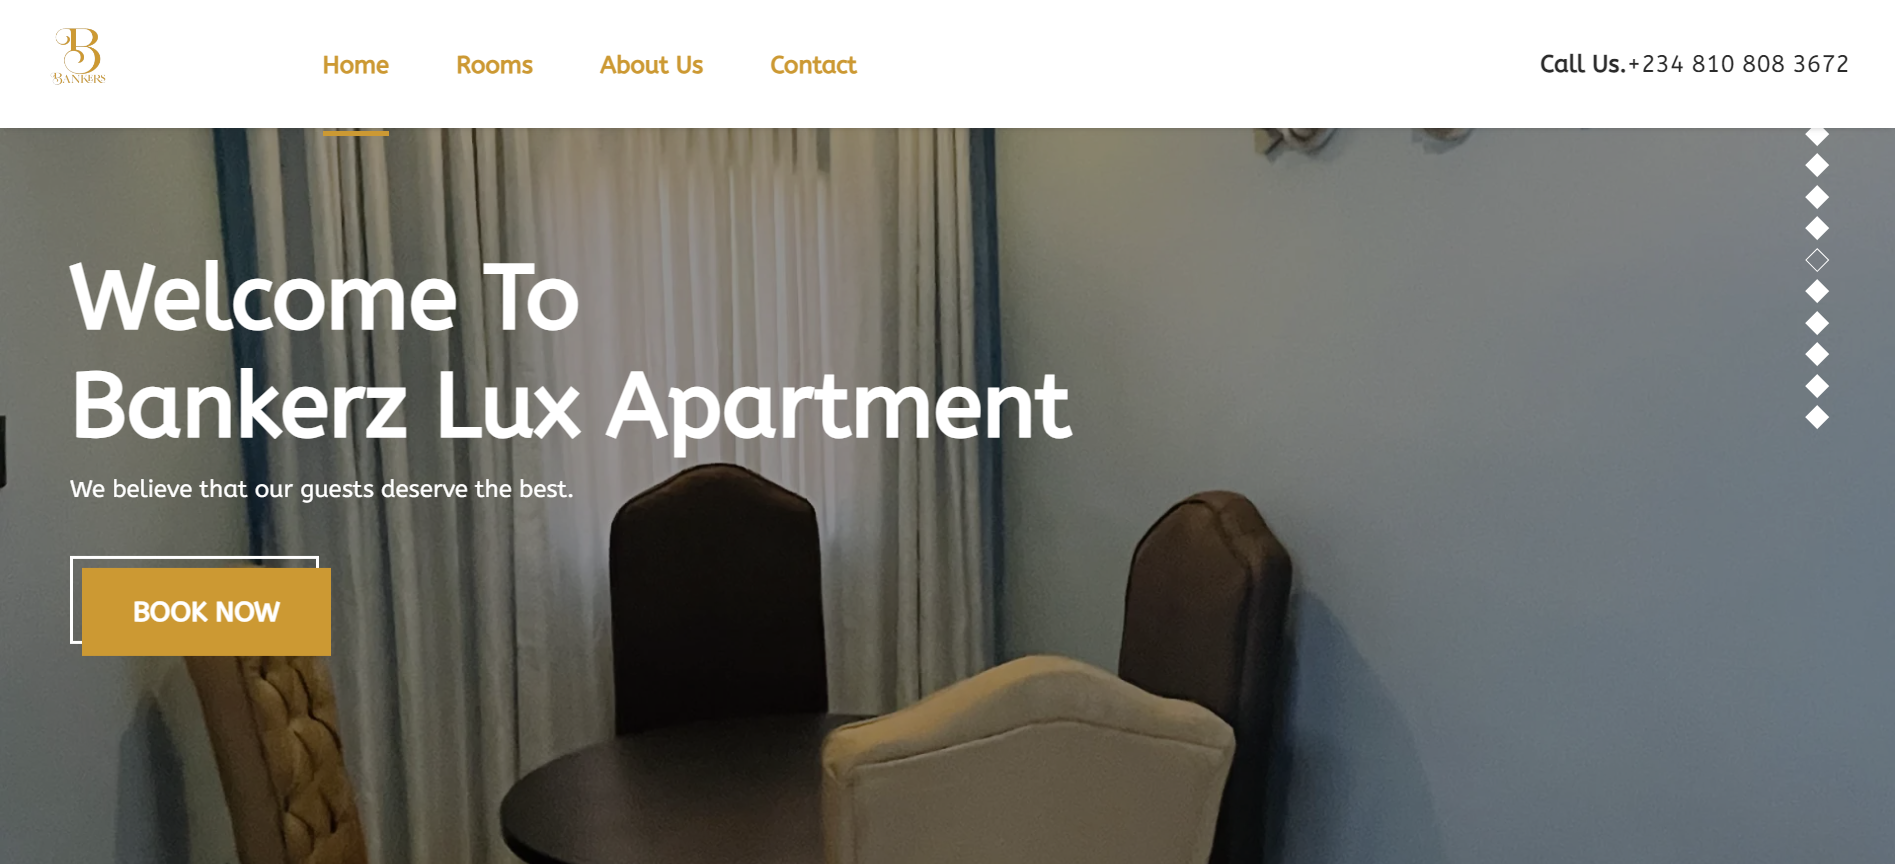 Bankerz Lux Apartment